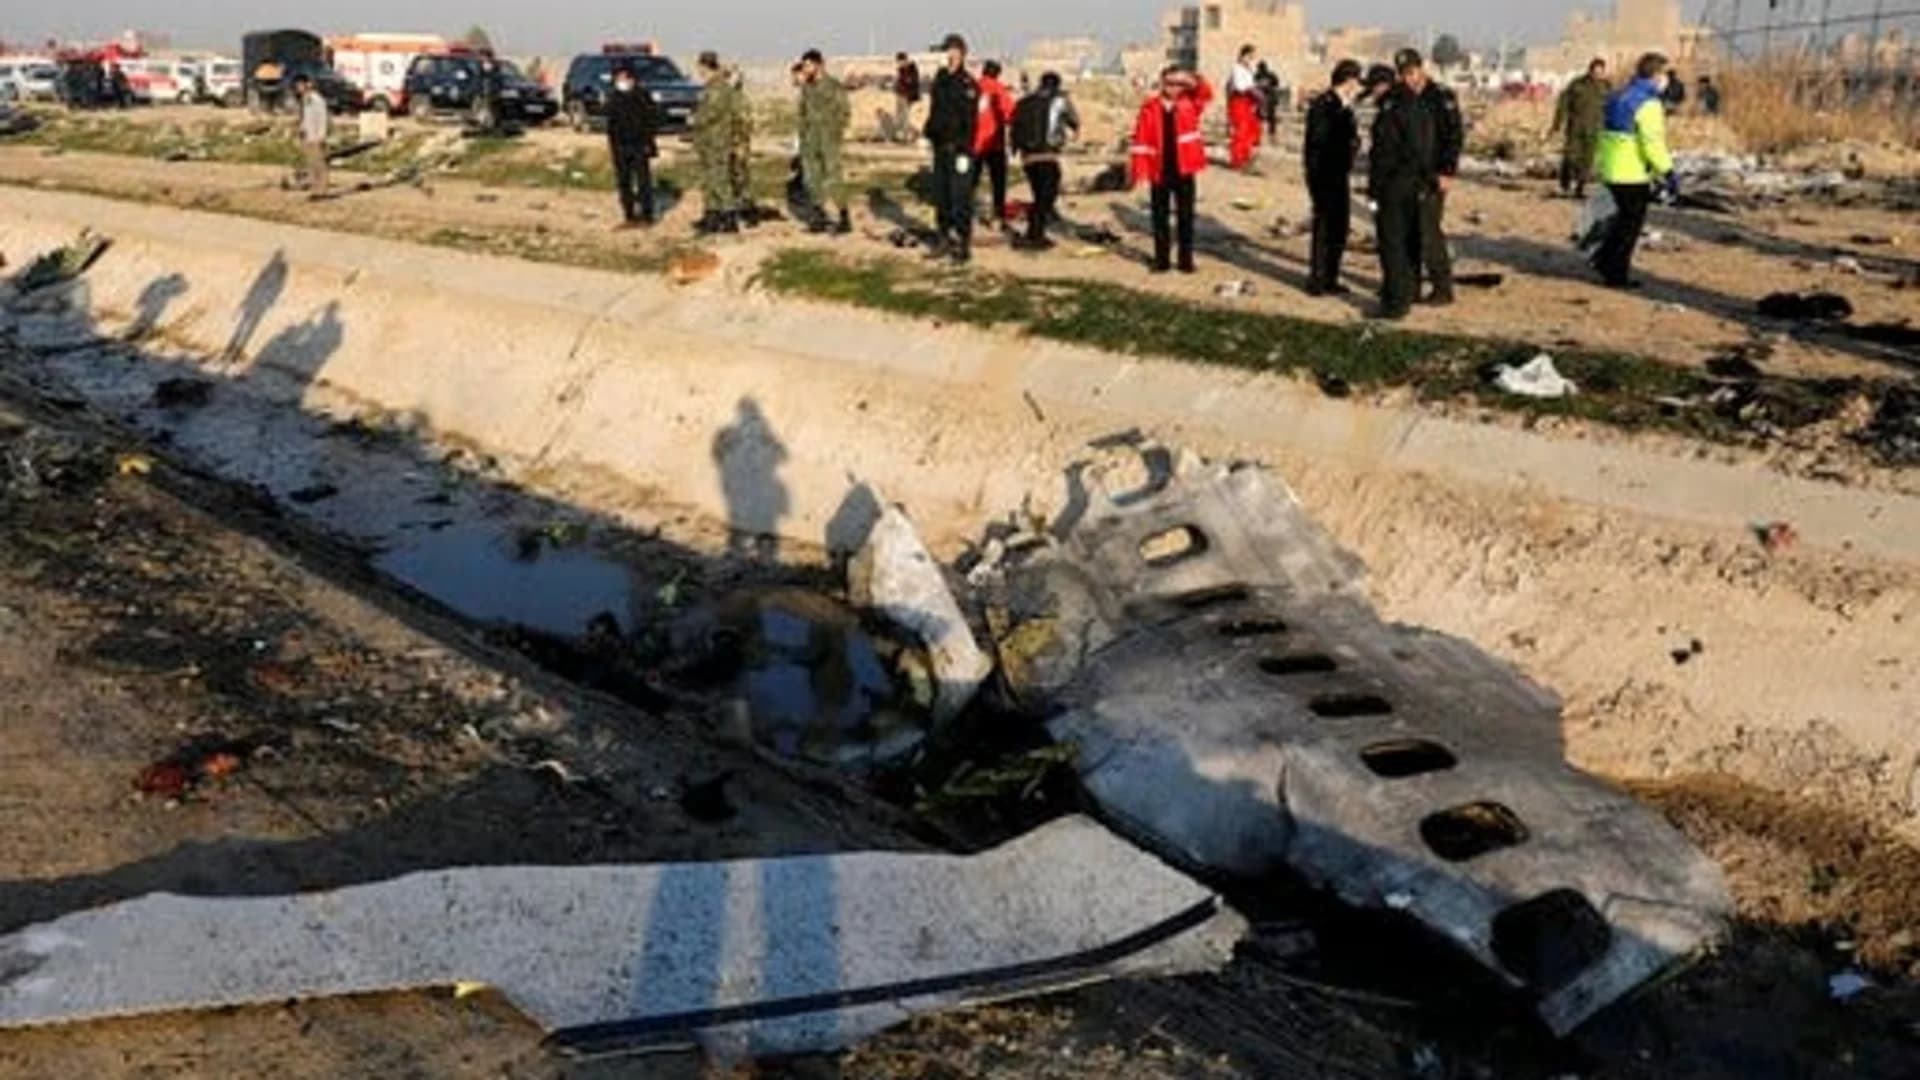 Iran says it 'unintentionally' shot down Ukrainian jetliner